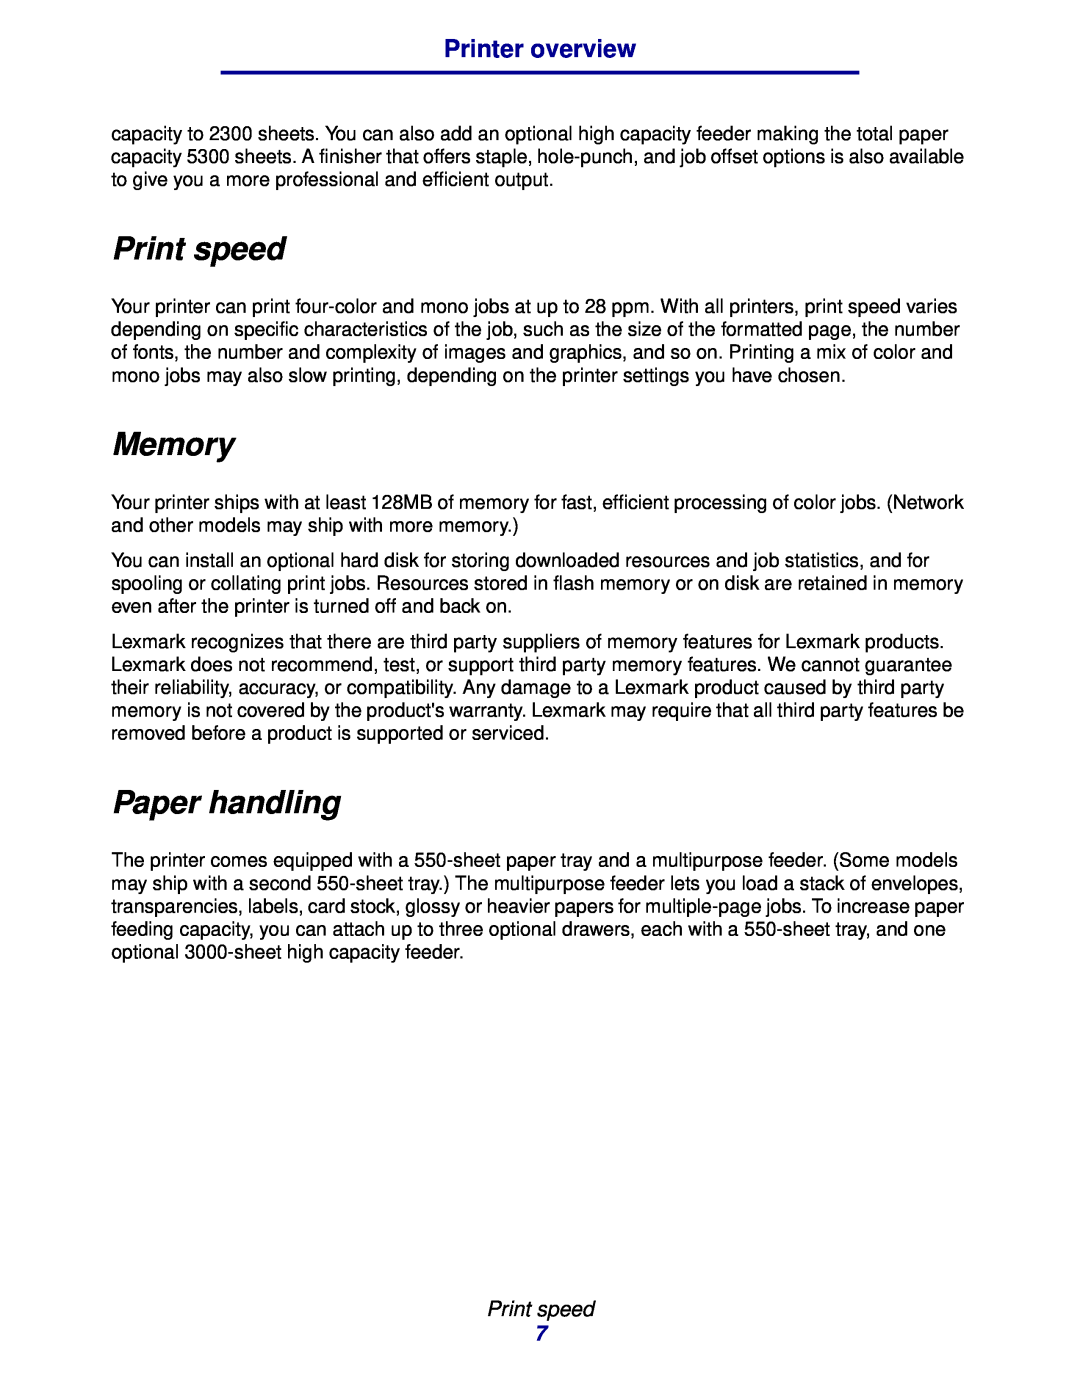 Lexmark 912 manual Print speed, Memory, Paper handling, Printer overview 